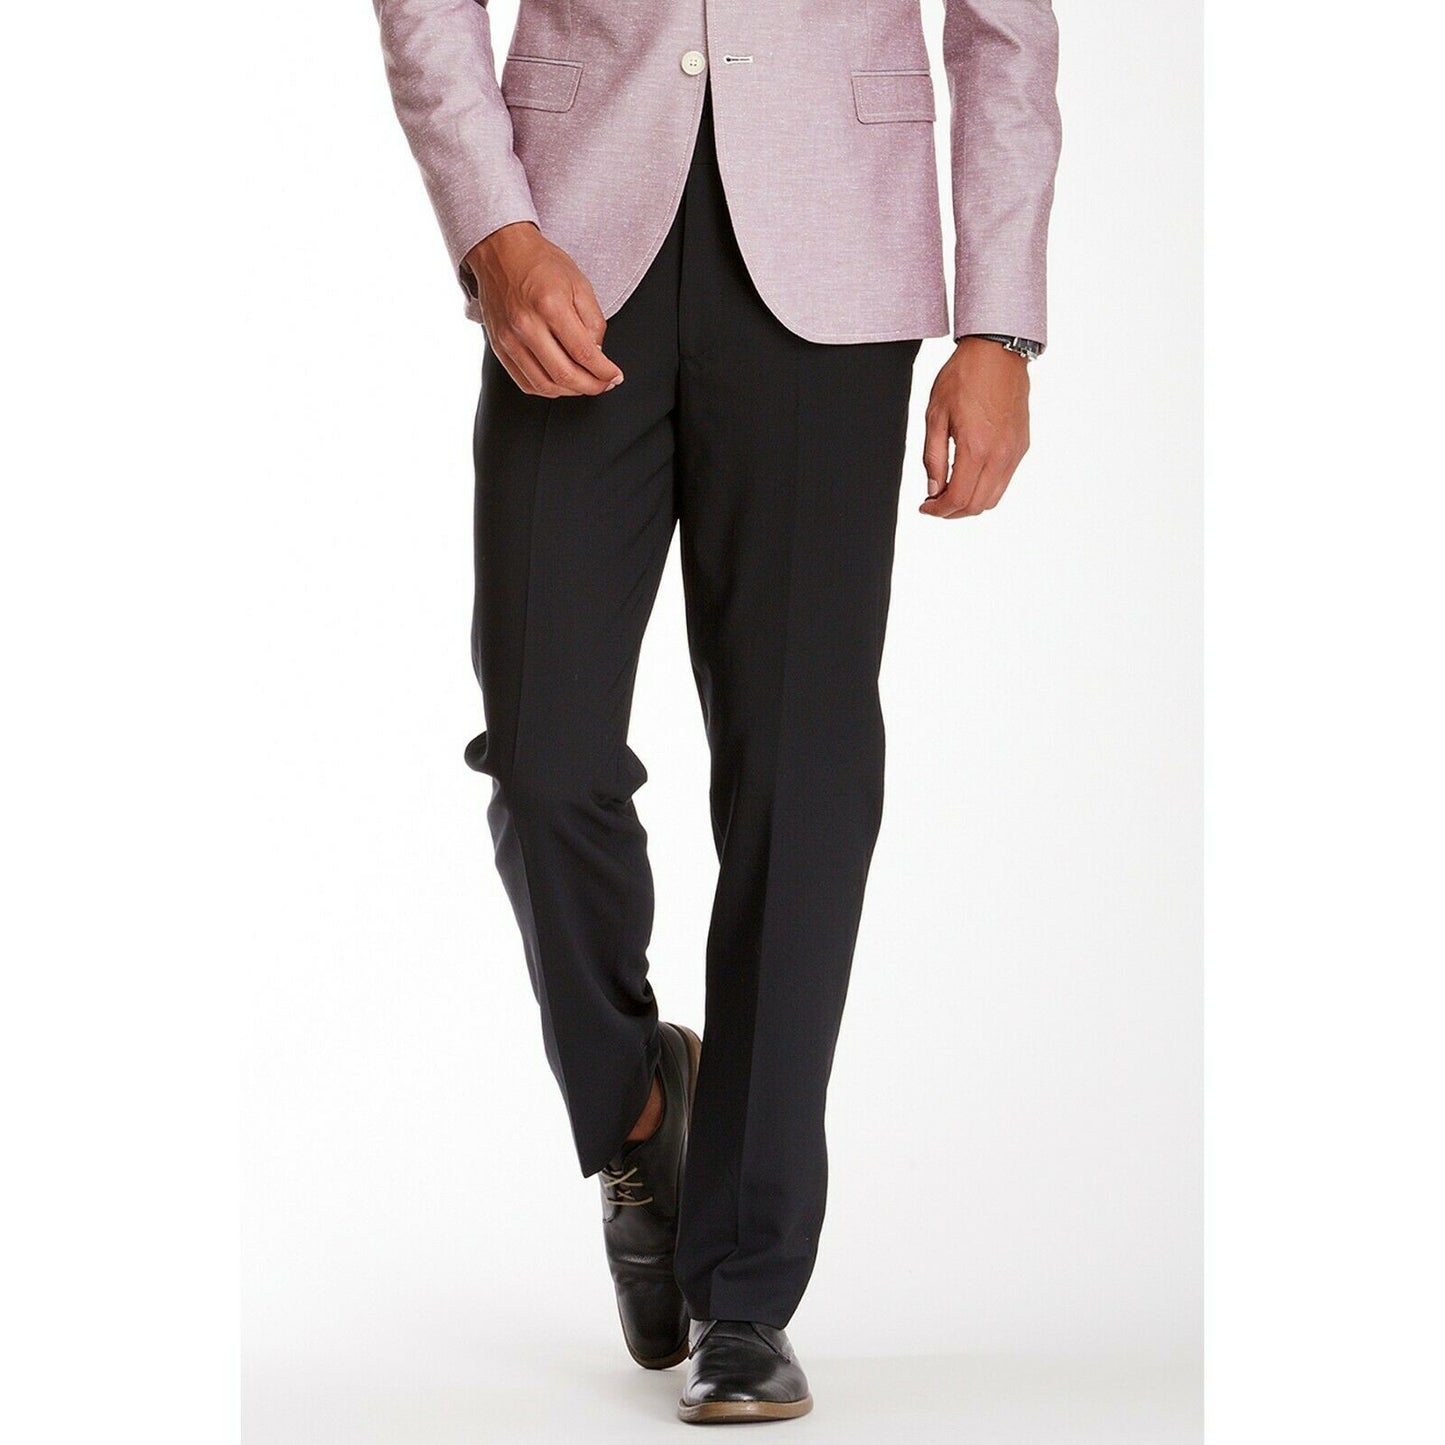 Ike Behar Mens Wool Flat Front Dress Suit Slacks Pants Black 42 NWT